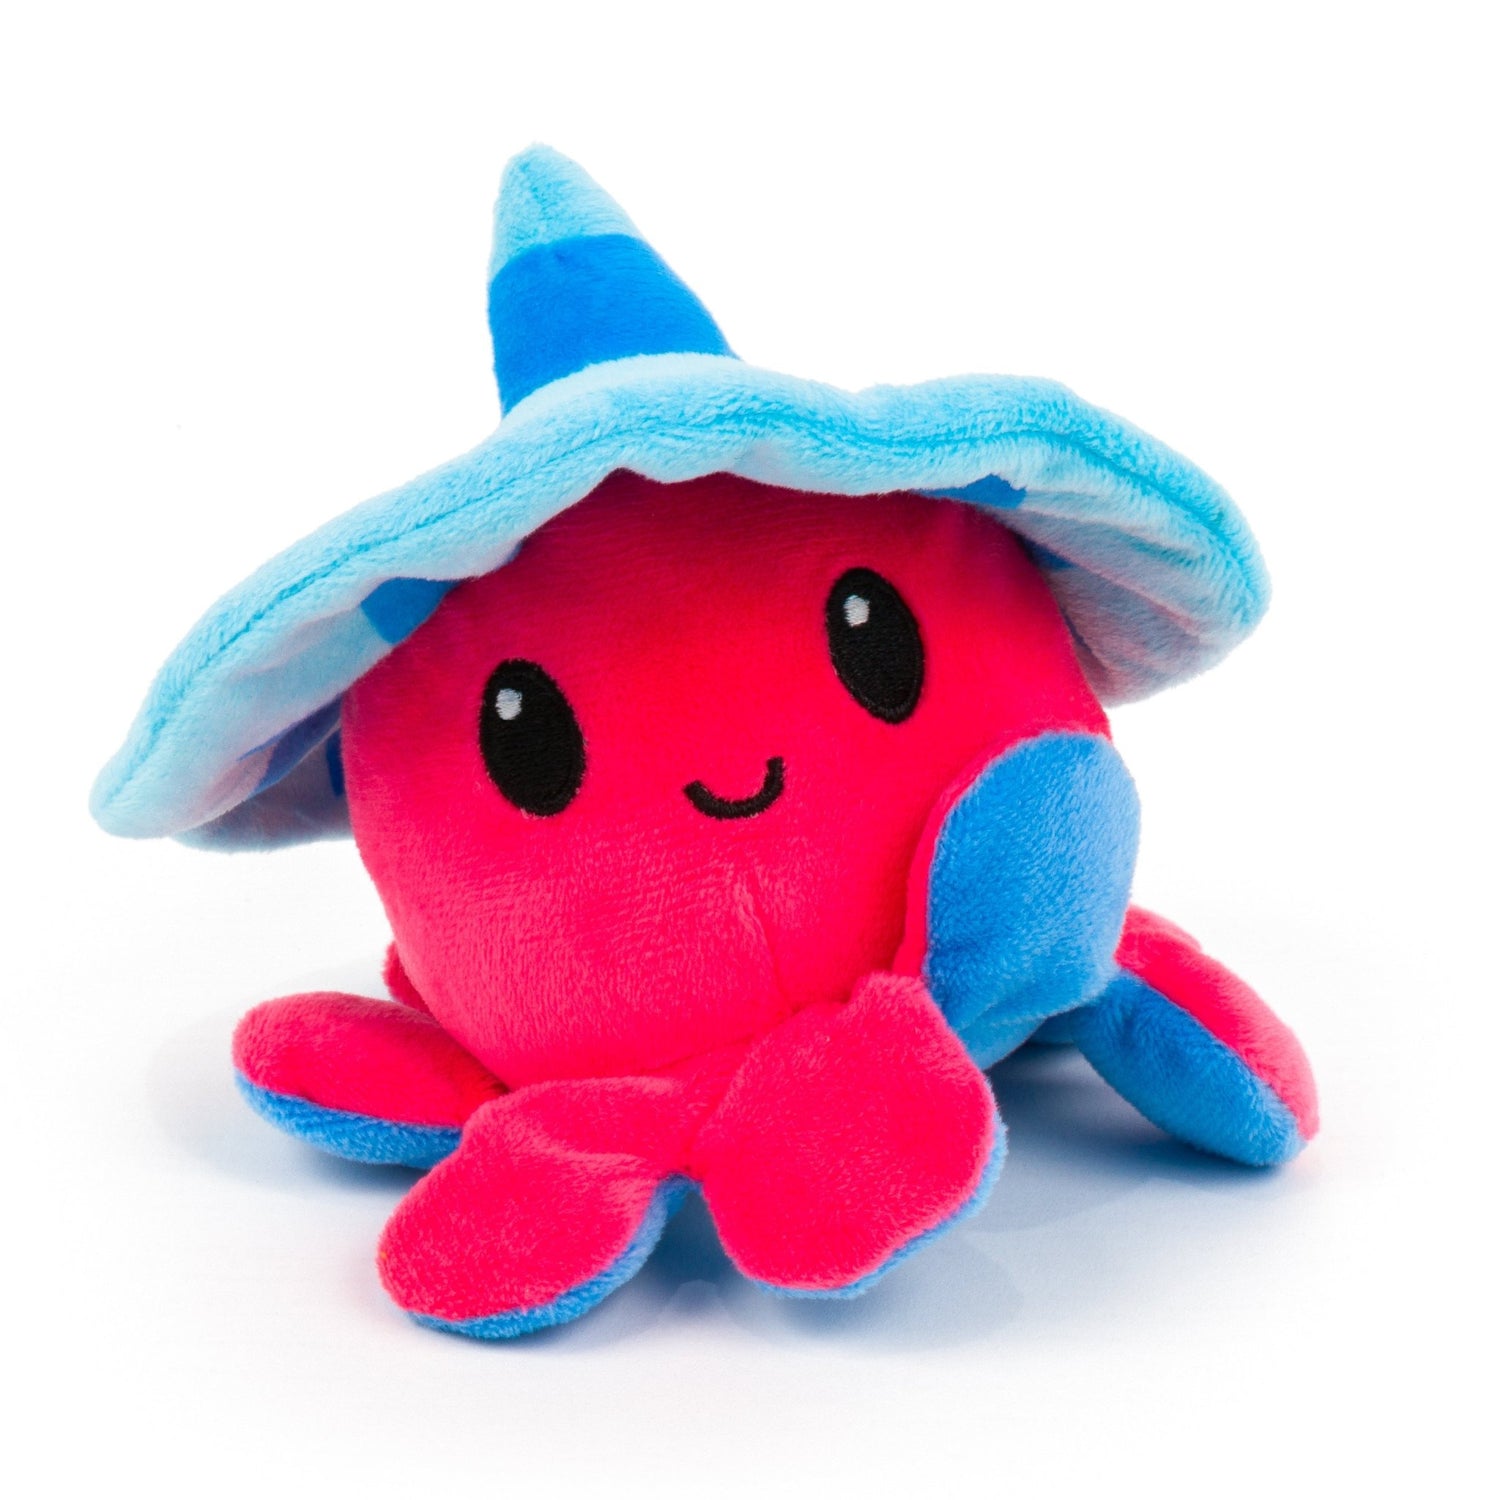 Octopus Plush Toy - Snuggie Buggies